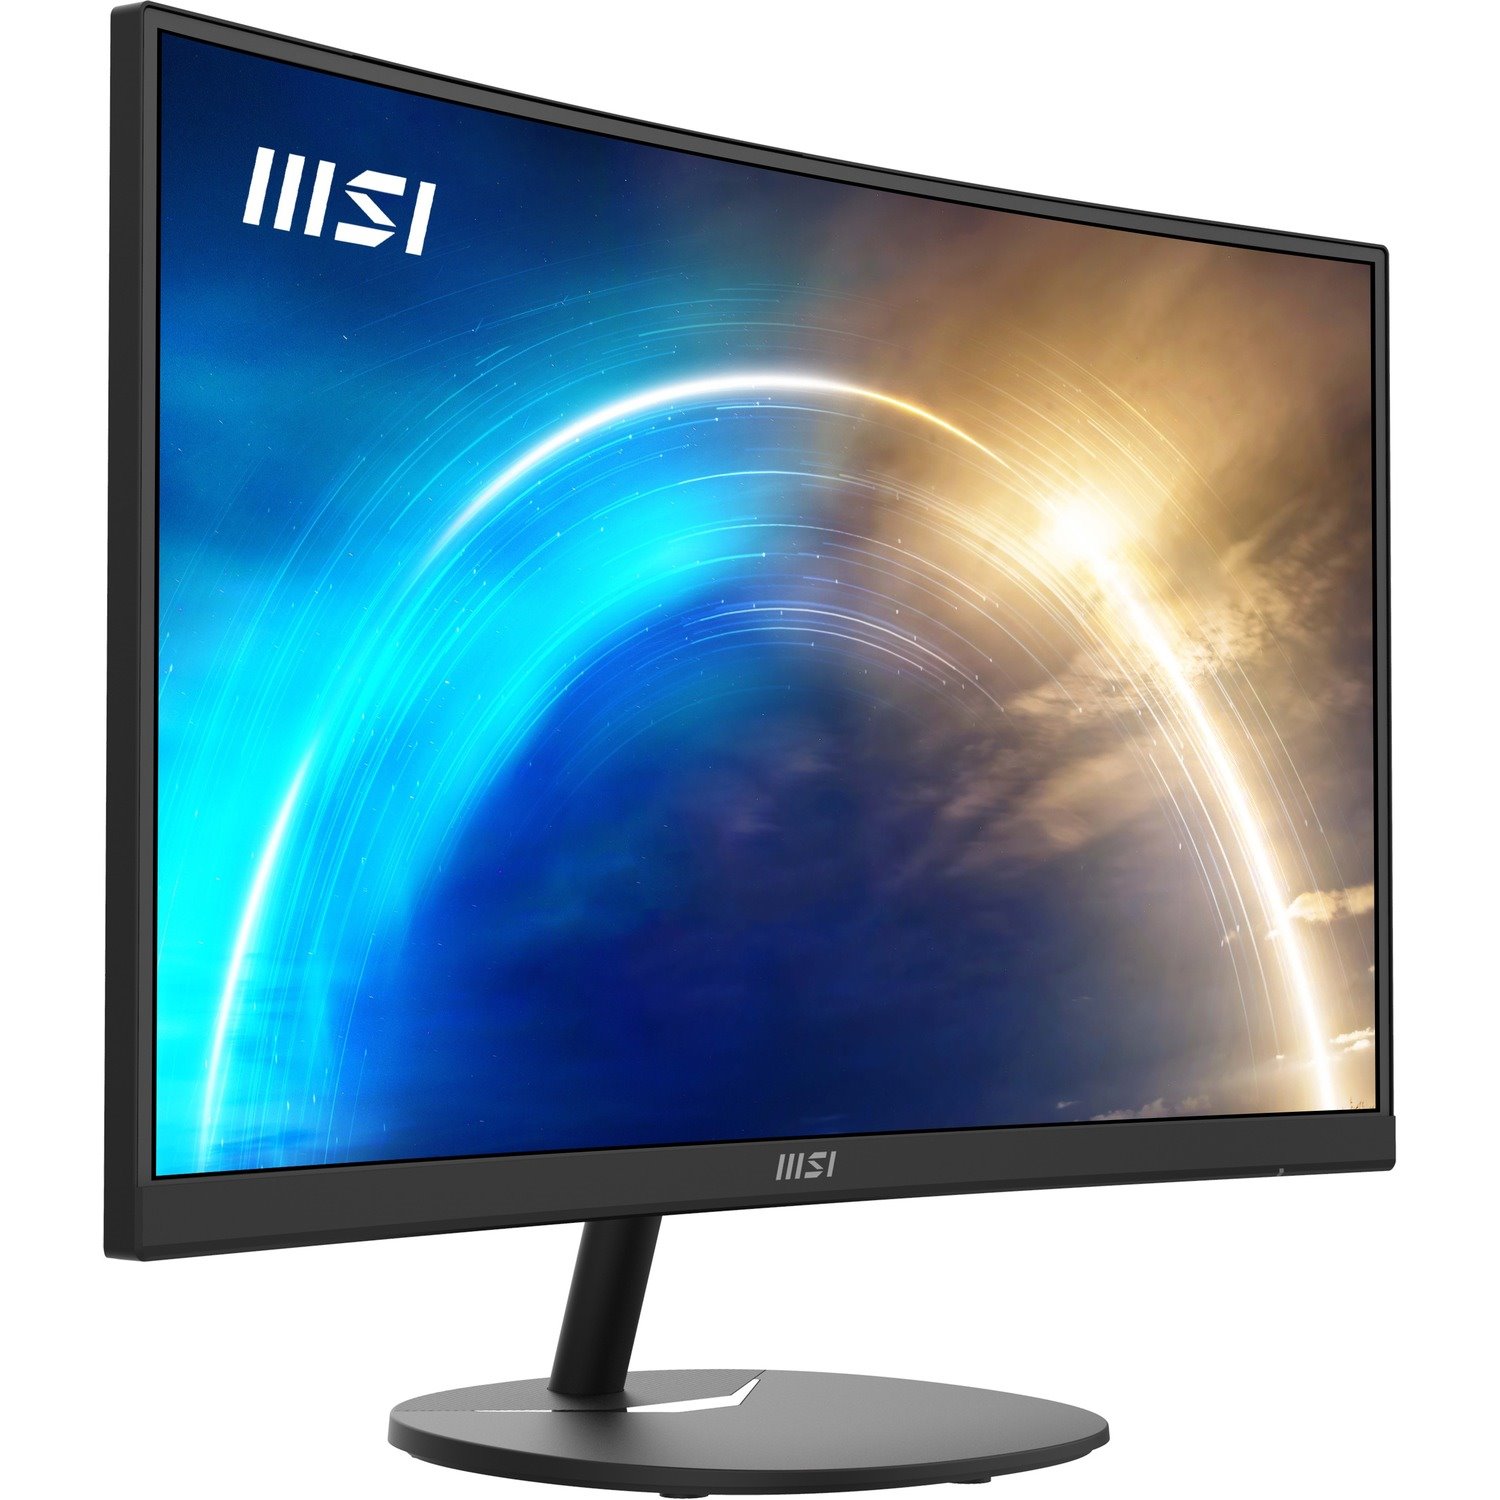 MSI Pro 27" Full HD LCD Monitor - 16:9